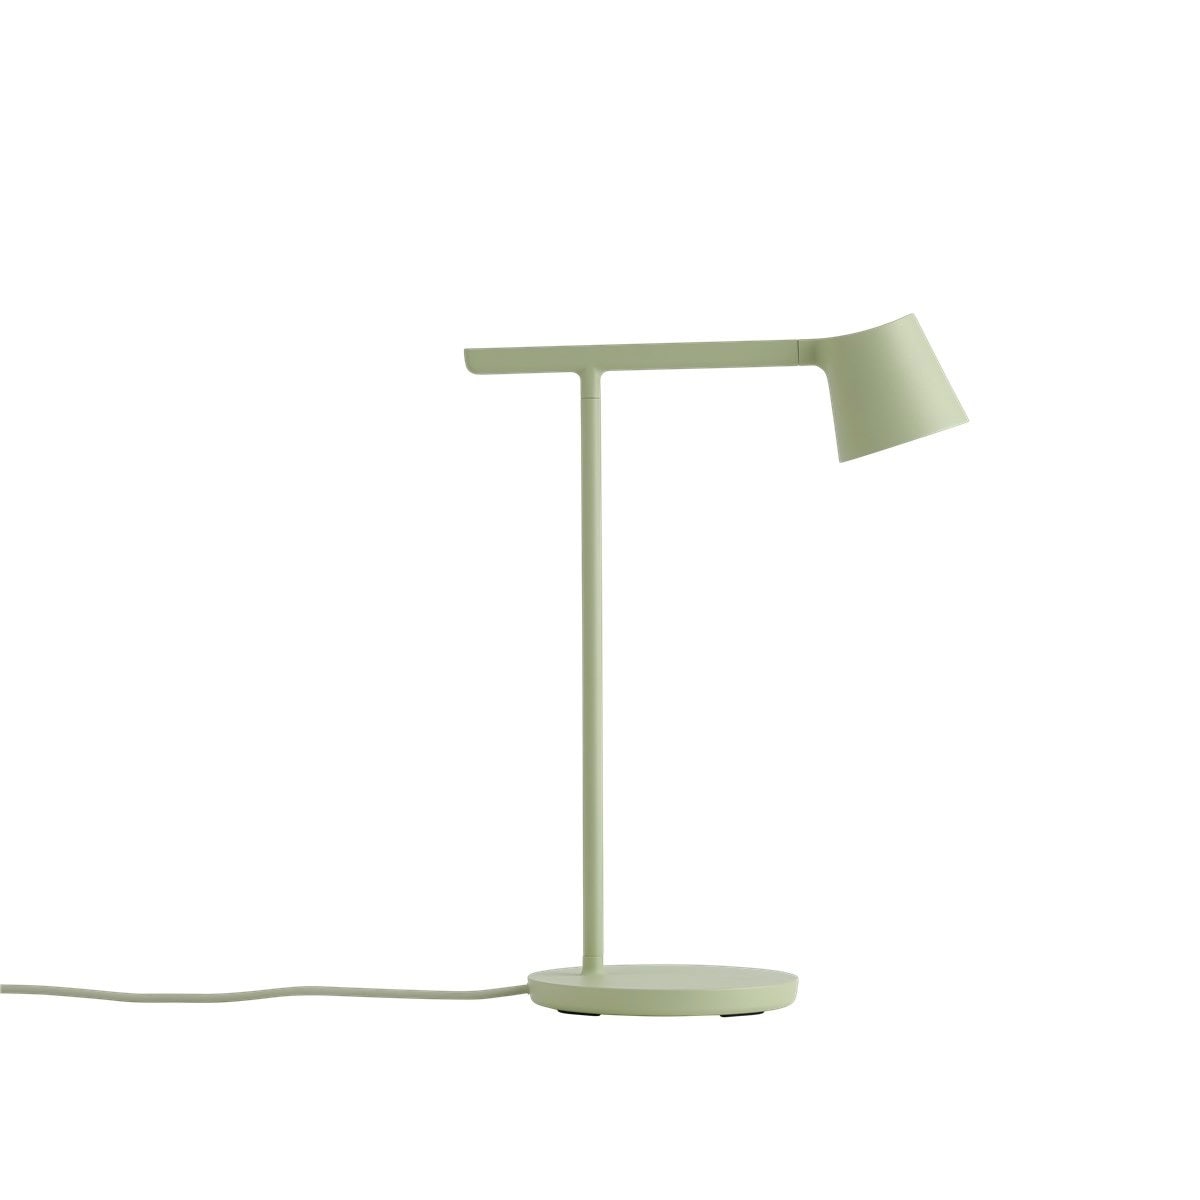 Tip bordslampa ljusgrön